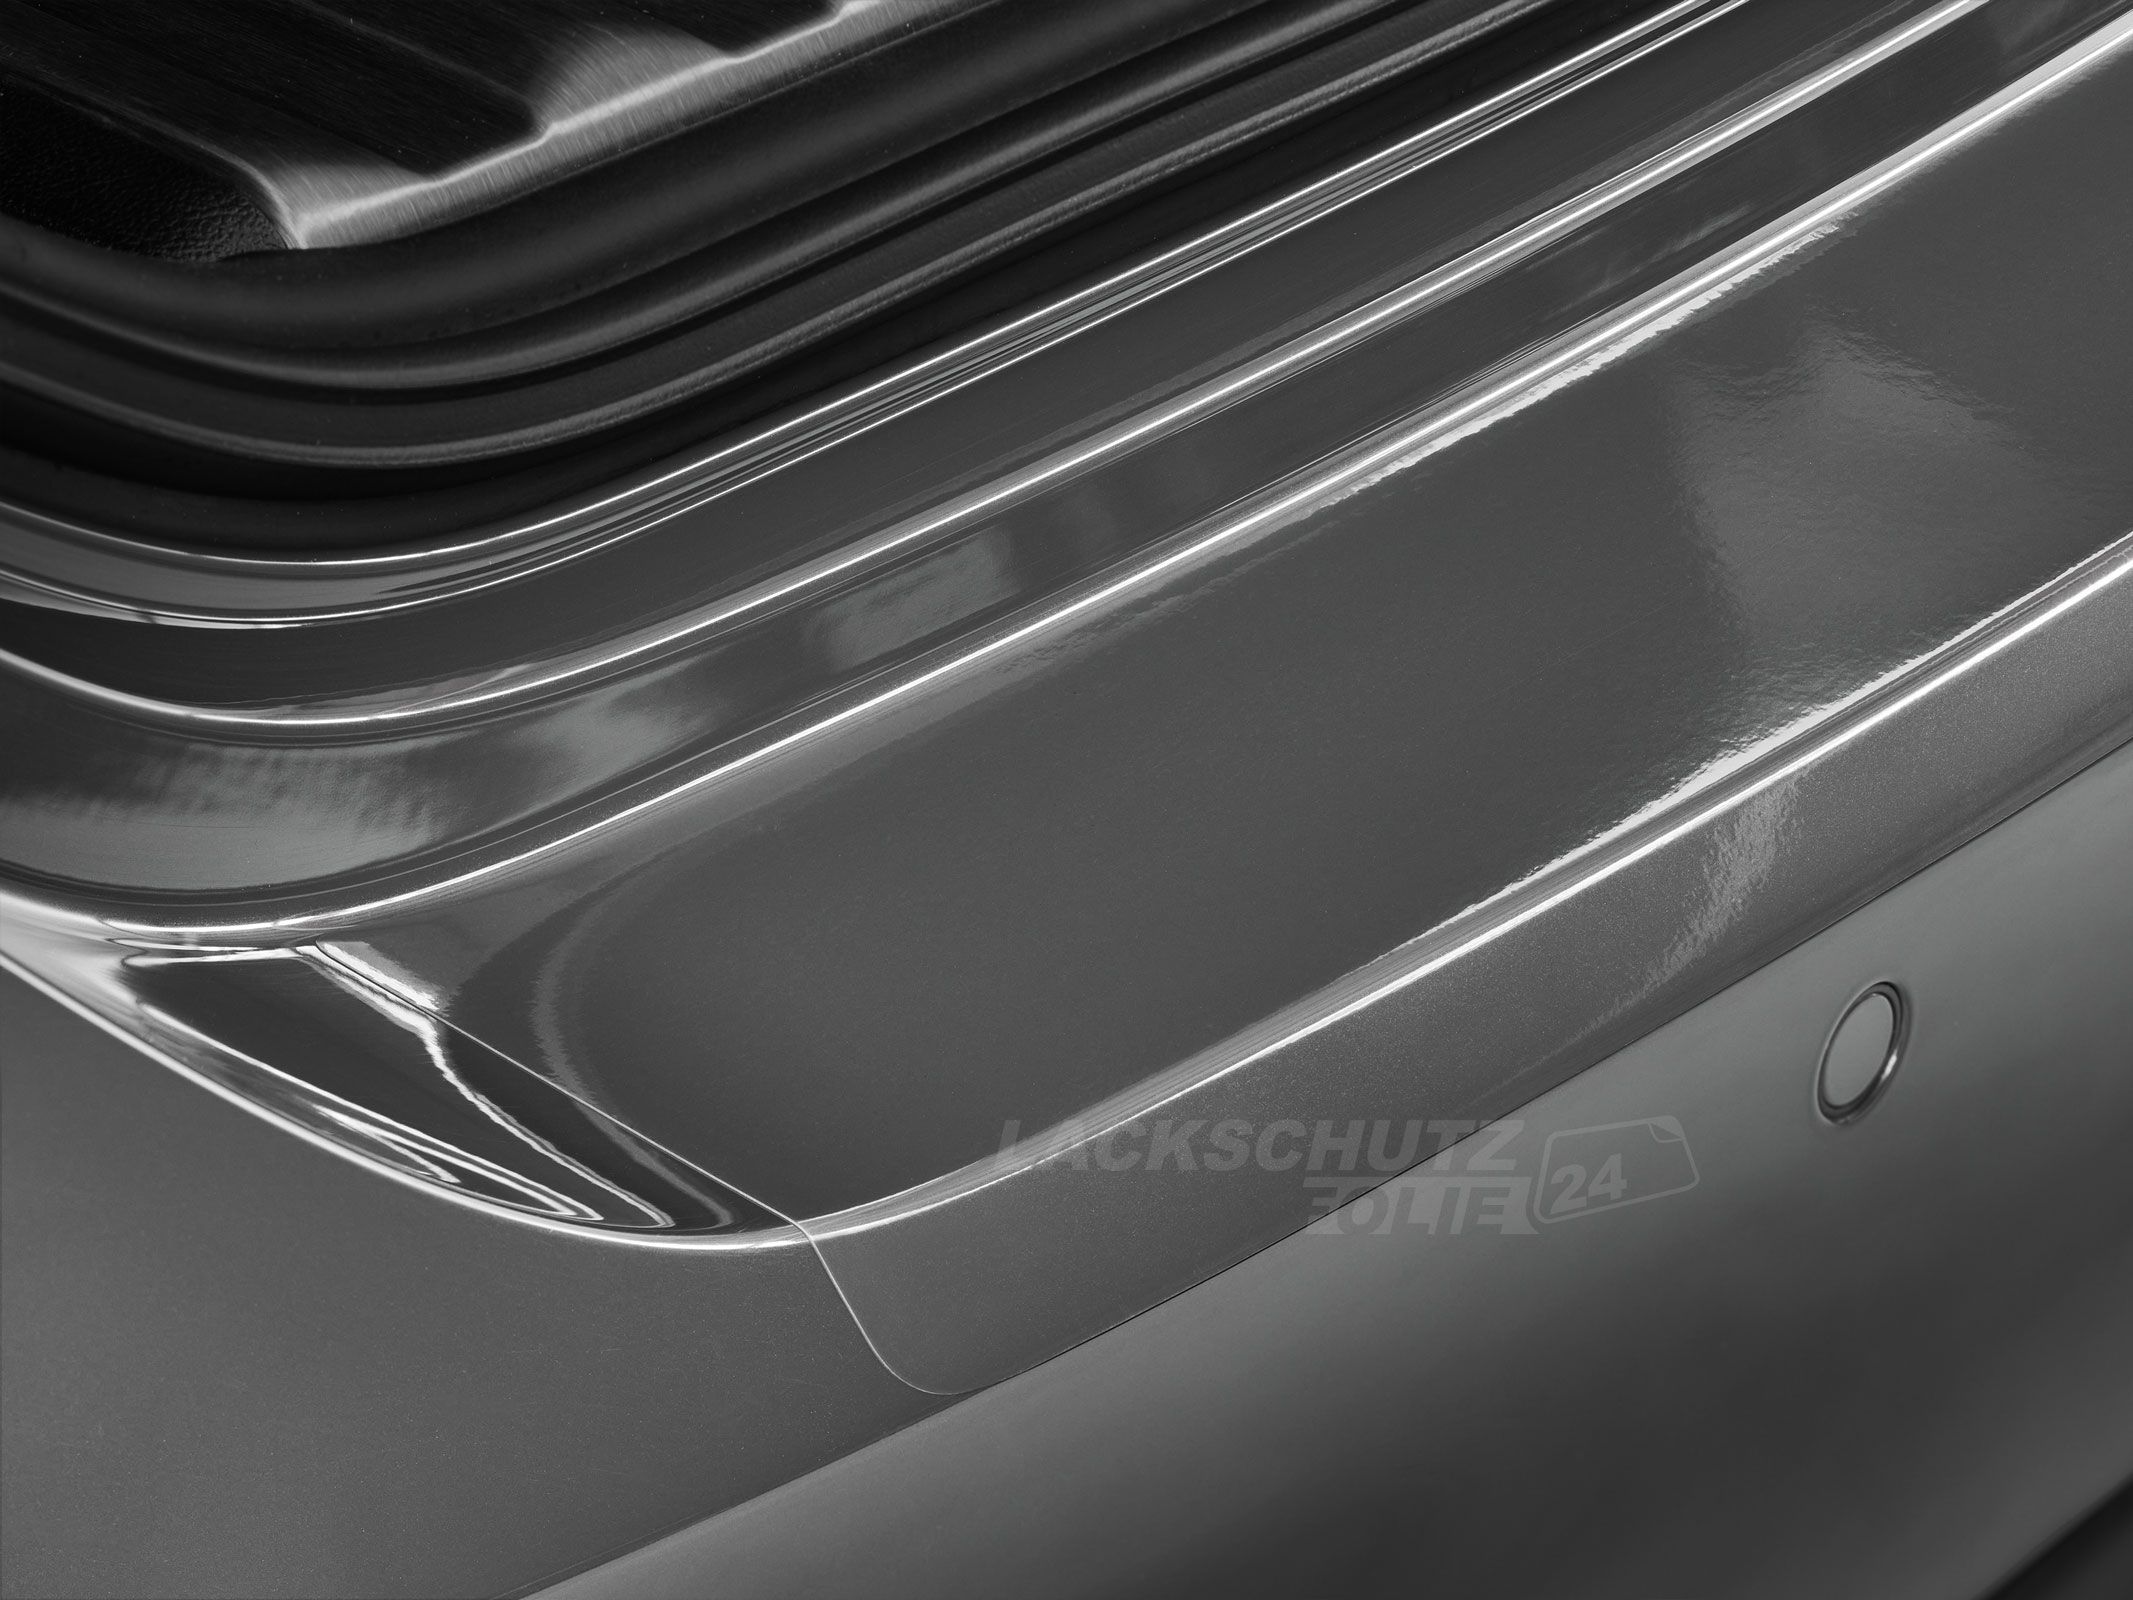 Ladekantenschutzfolie - Transparent Glatt Hochglänzend 240 µm stark für BMW 1er Coupe Typ E82, BJ 10/2007-10/2013